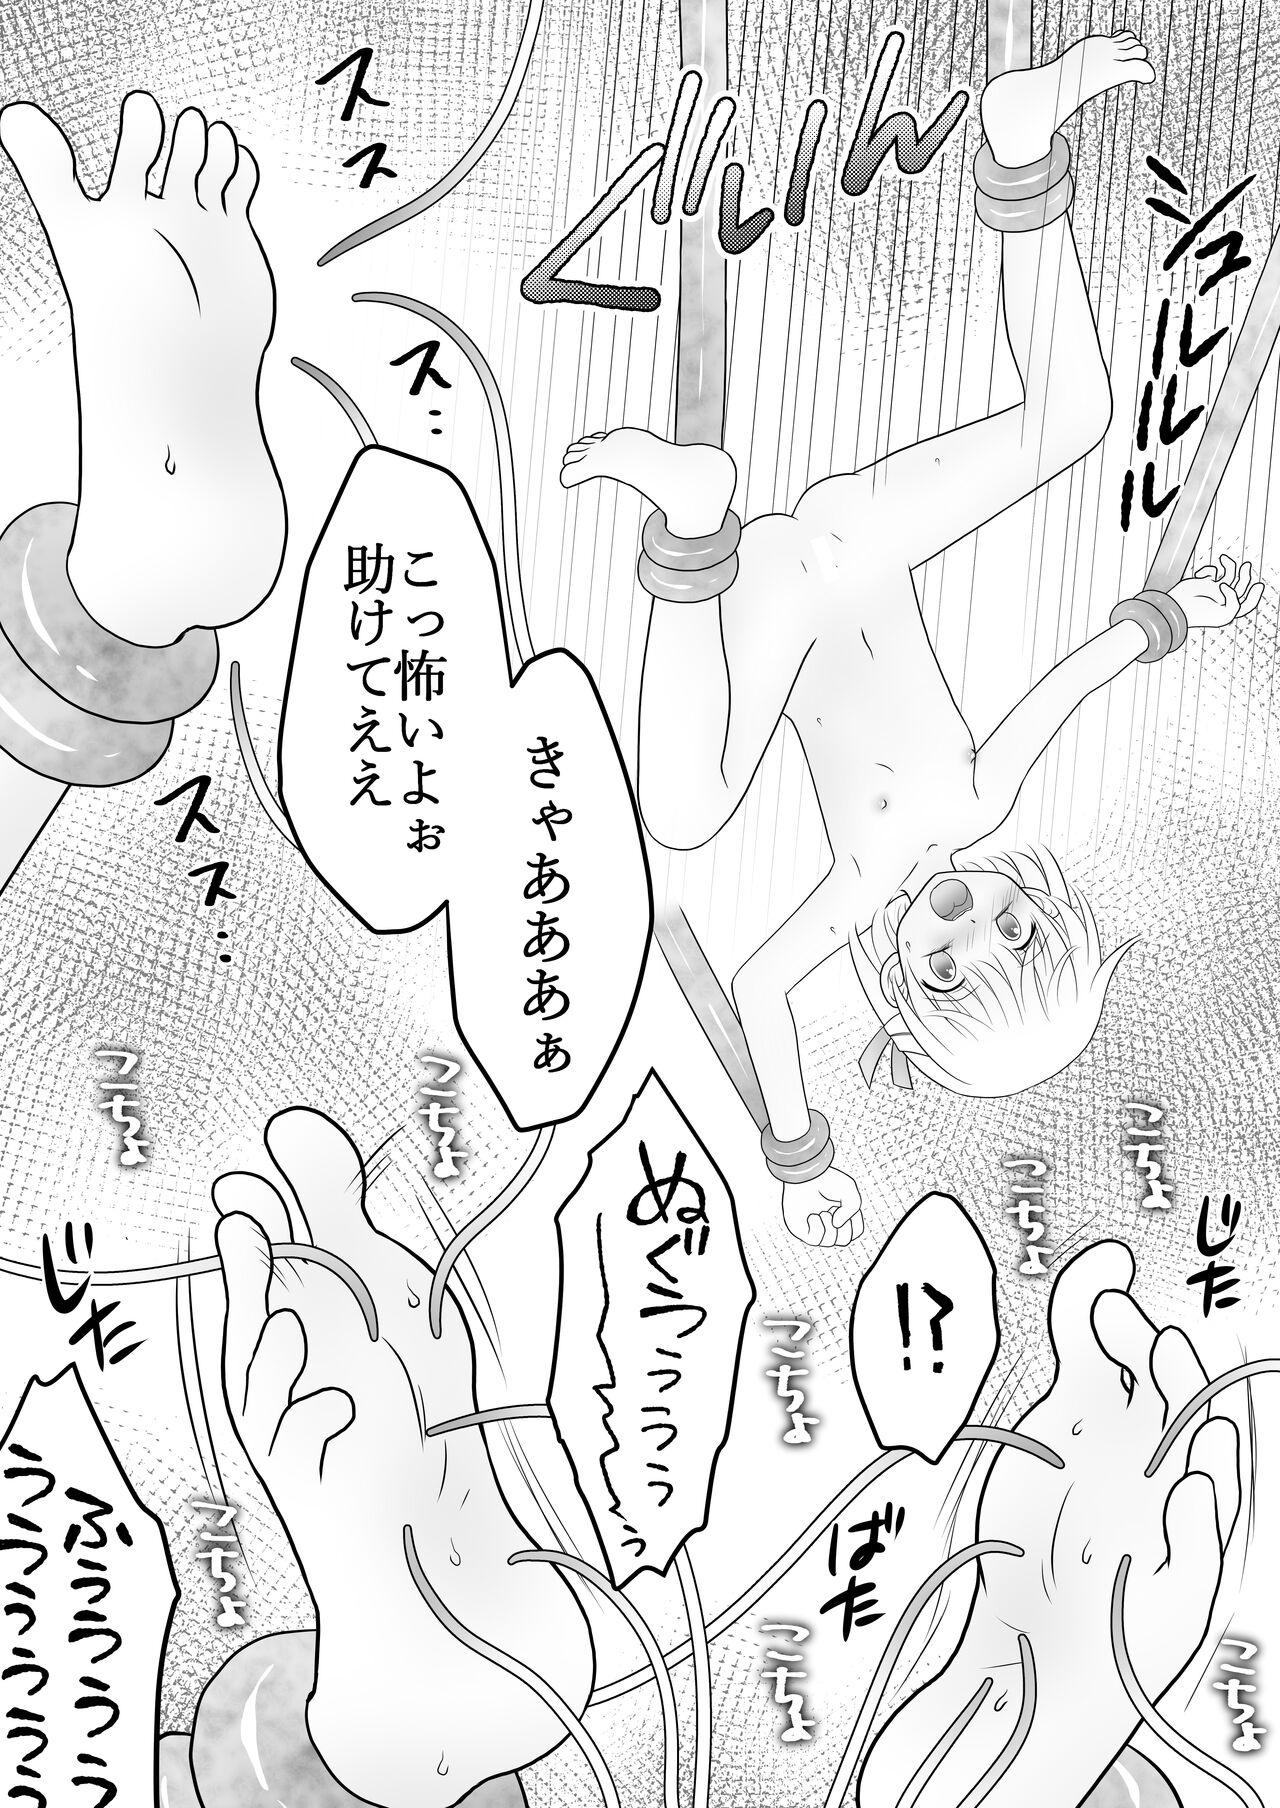 Red Head Maigo no Mori no Kusuguribana 4 - Original Camporn - Page 11